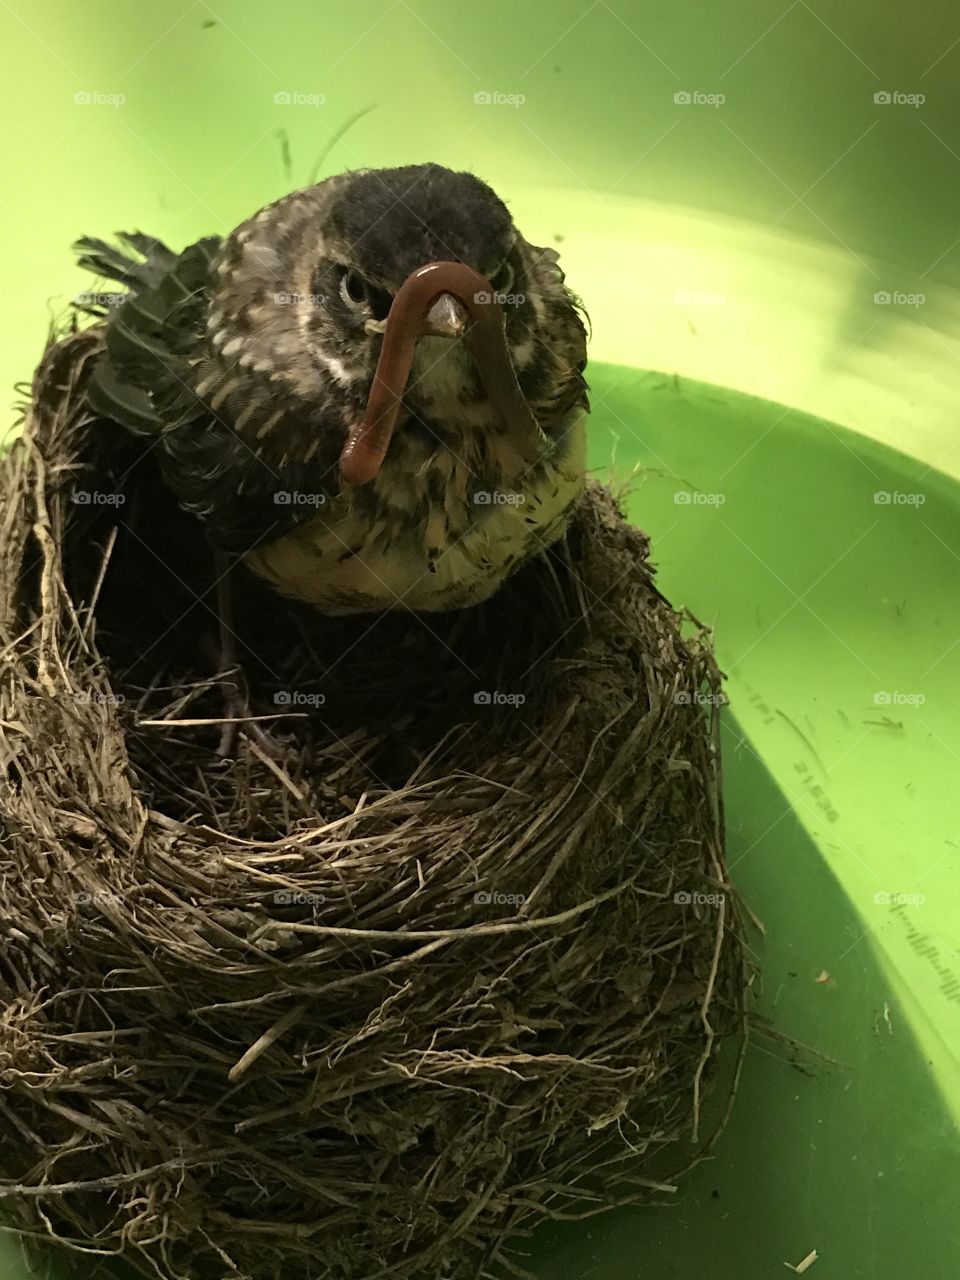 Silly baby bird with a worm wrapped around its beak. 